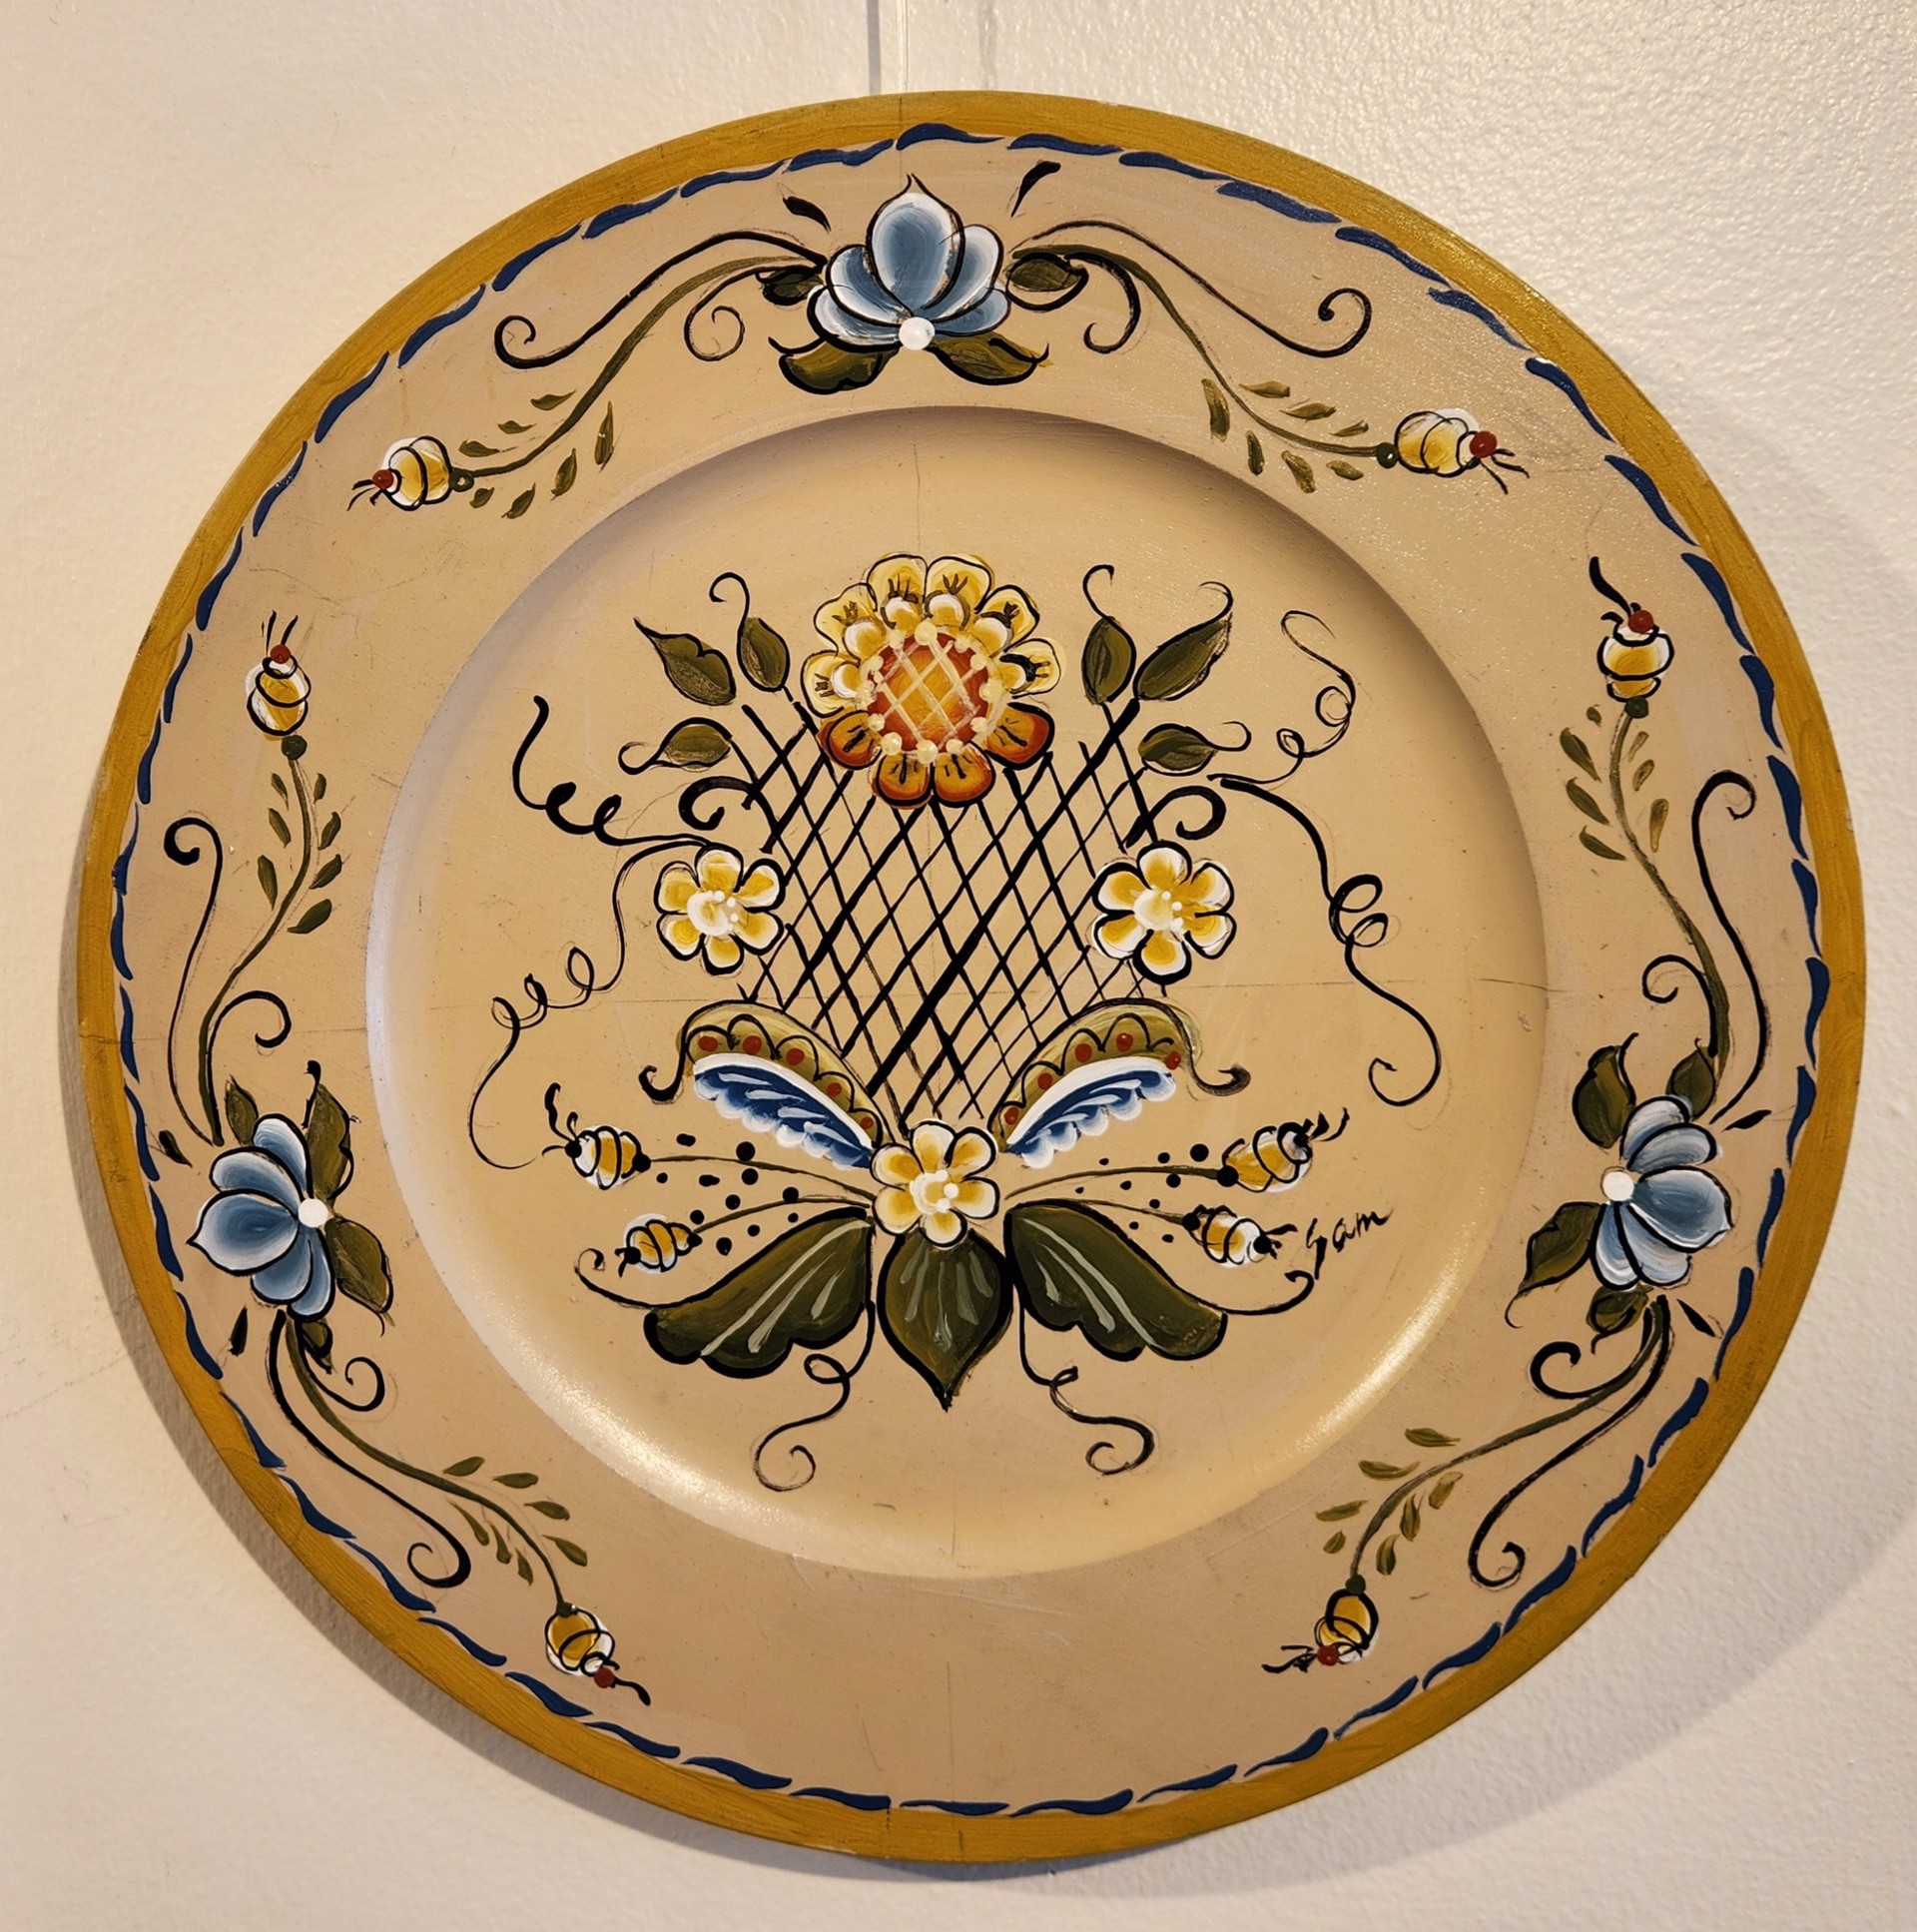 Swedish Folk Art Plate - Kurbits by Shirley Malm